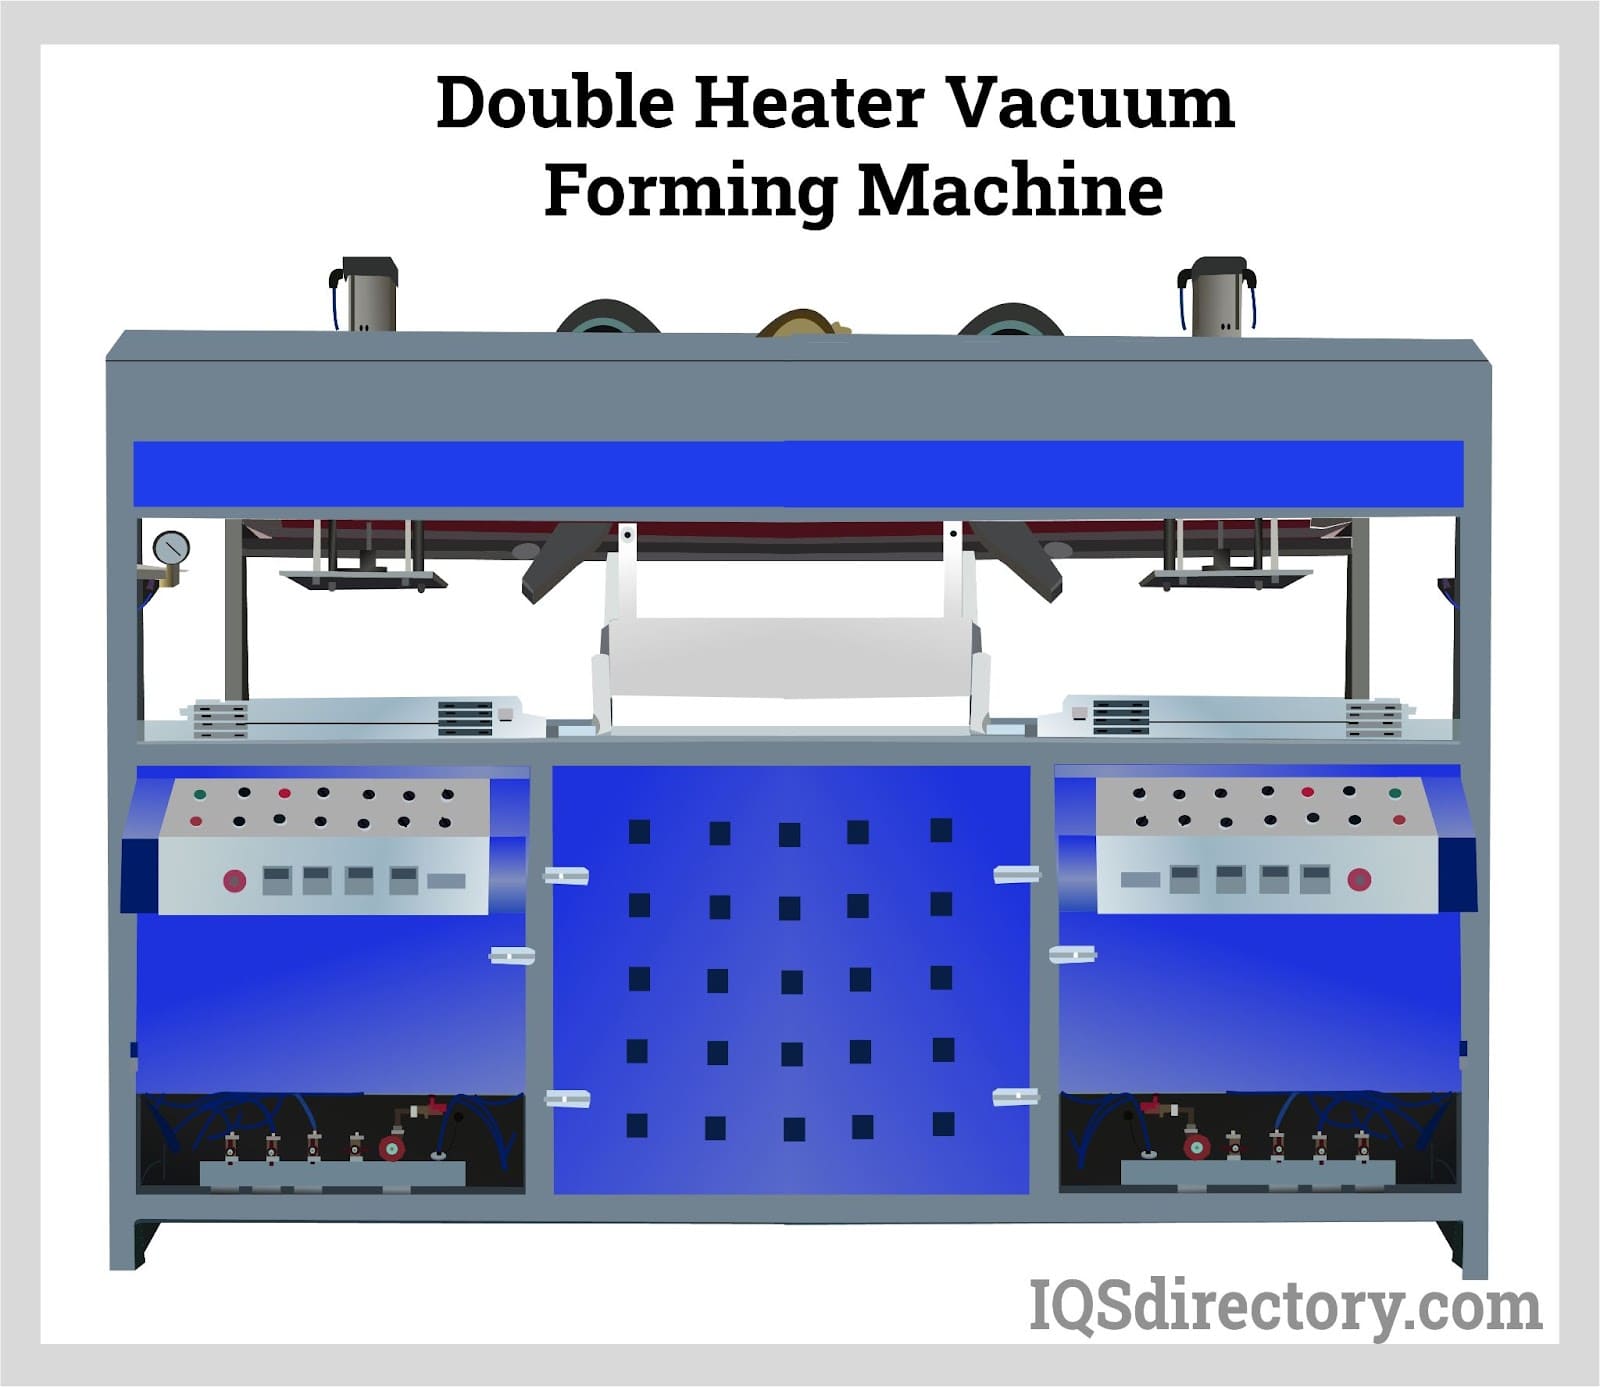  Double Heater Vacuum Forming Machine